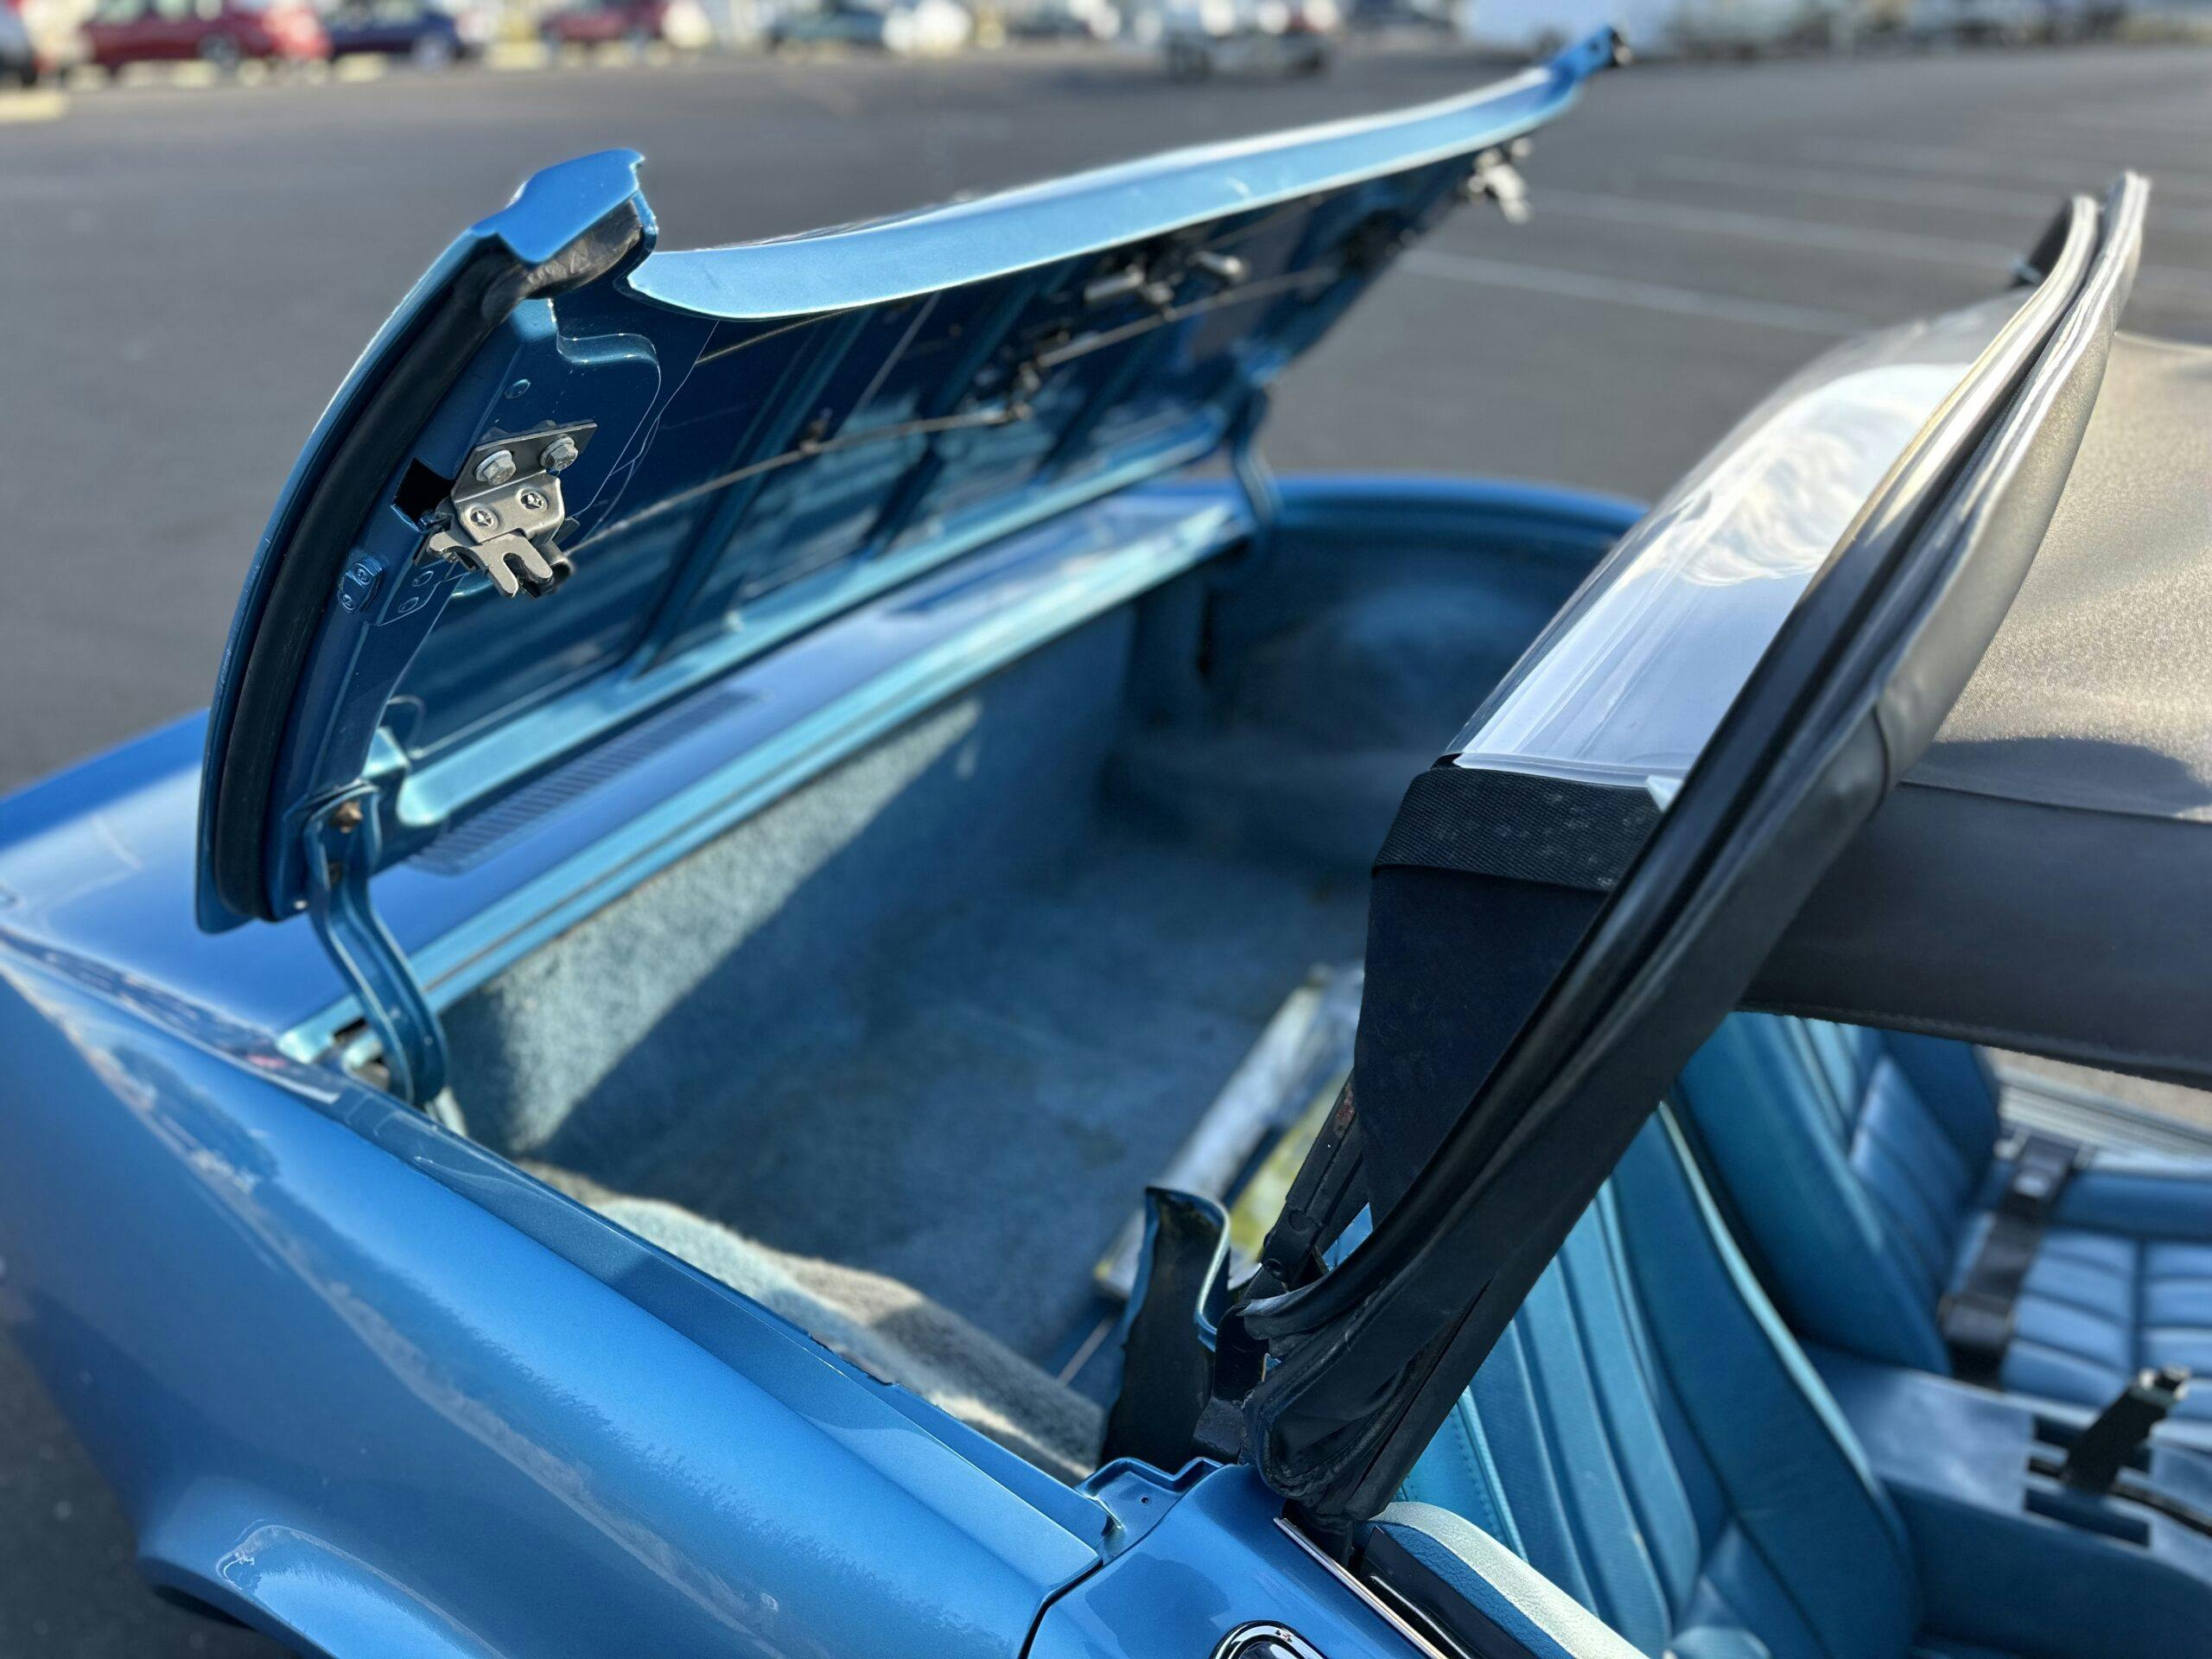 1968 Corvette C2 Stingray top compartment